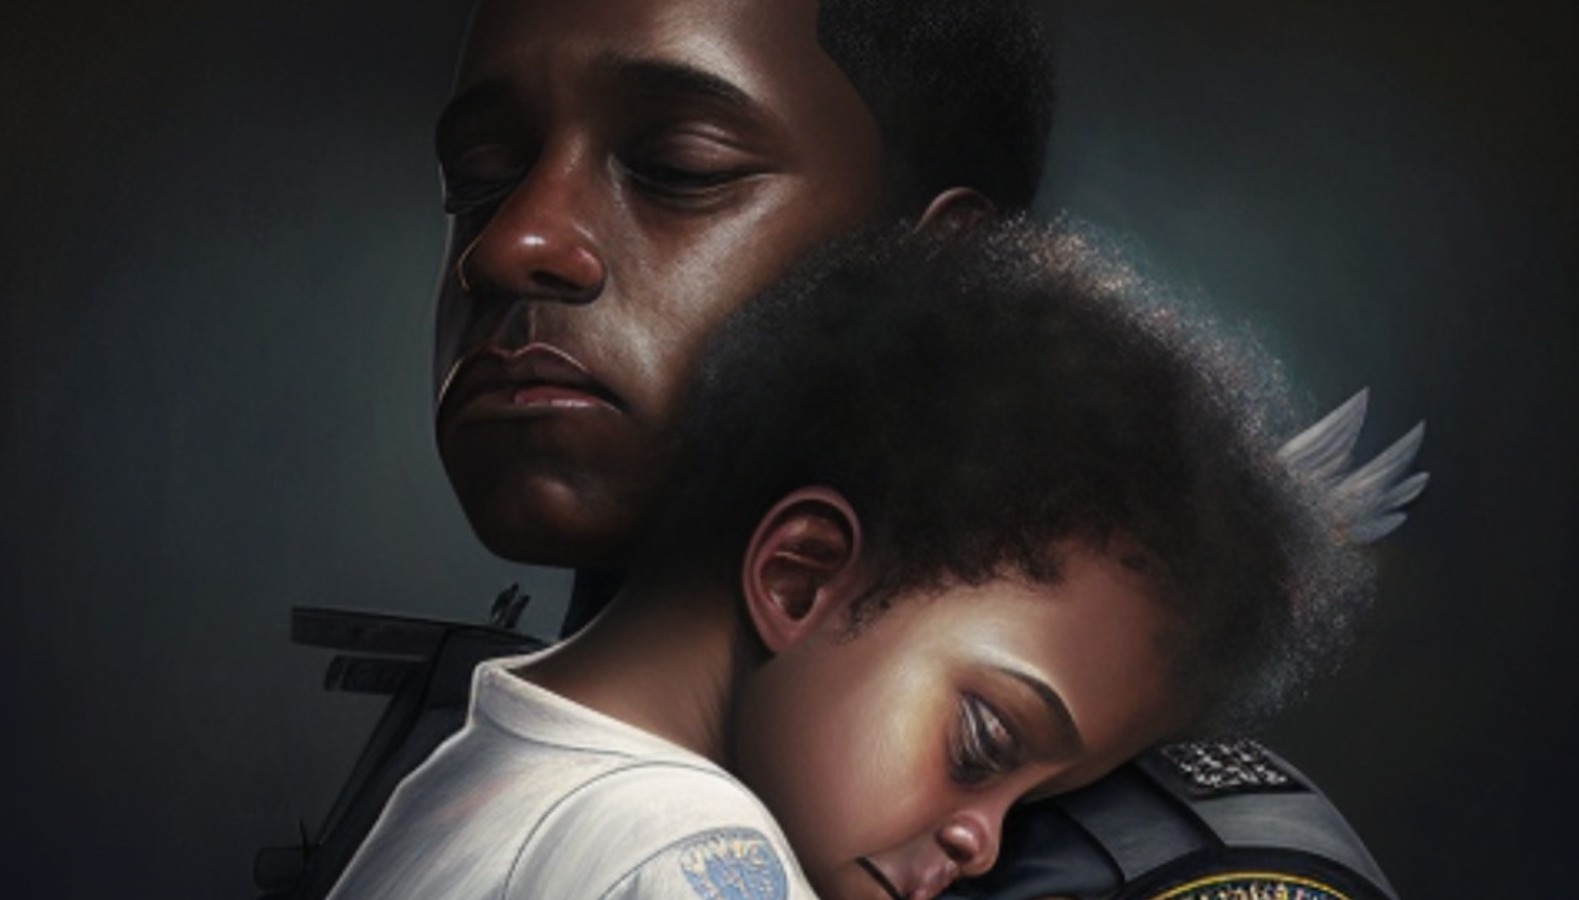 POSITIVE IMAGES OF BLACK FATHERHOOD